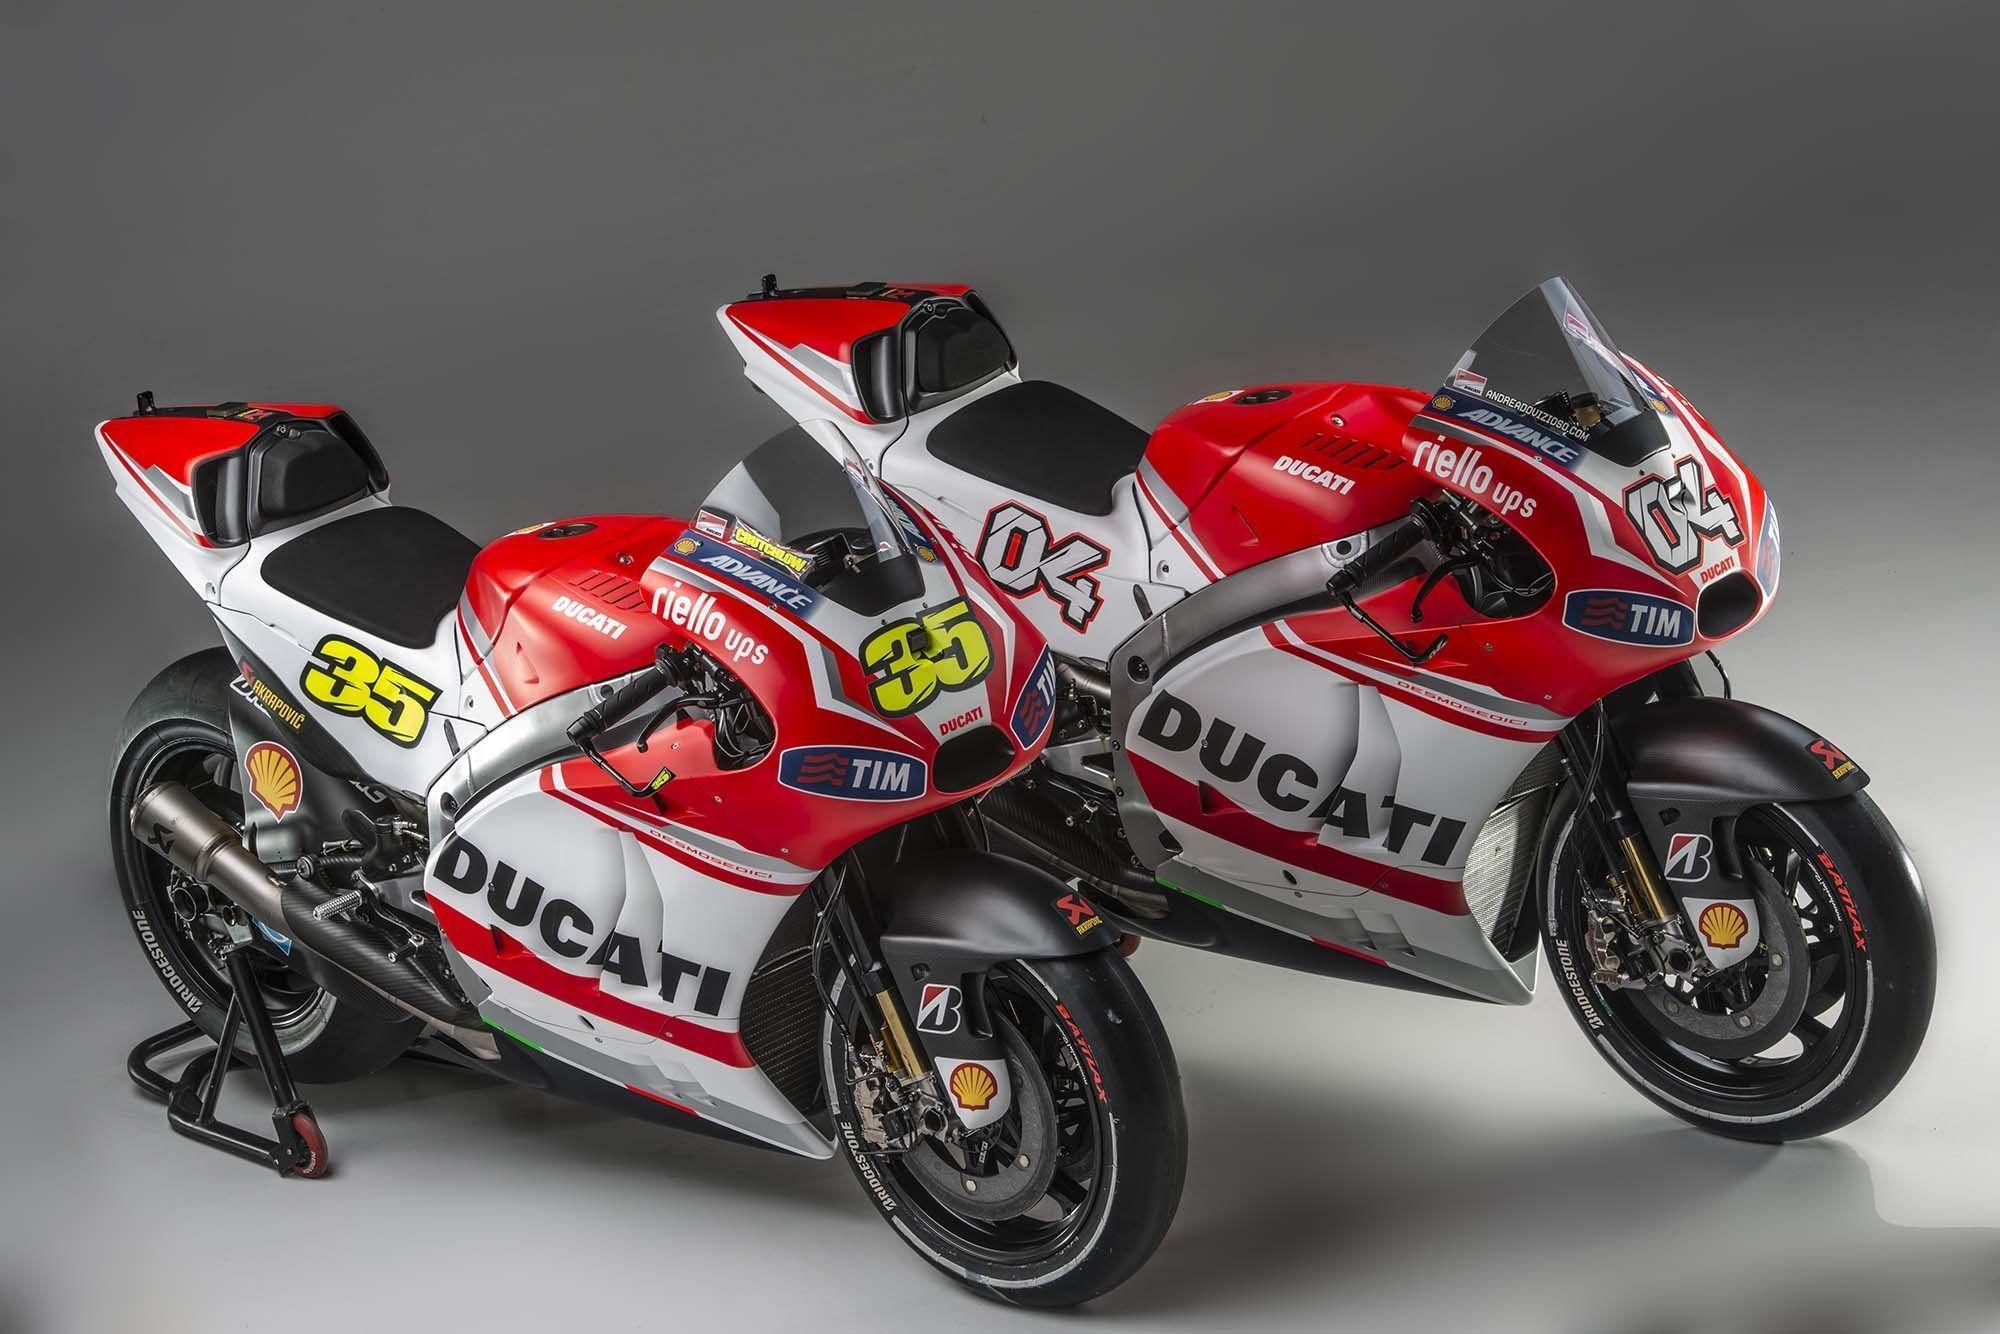 MotoGP: Ducati's 2015 MotoGP Bike Wont Be Ready In Time For